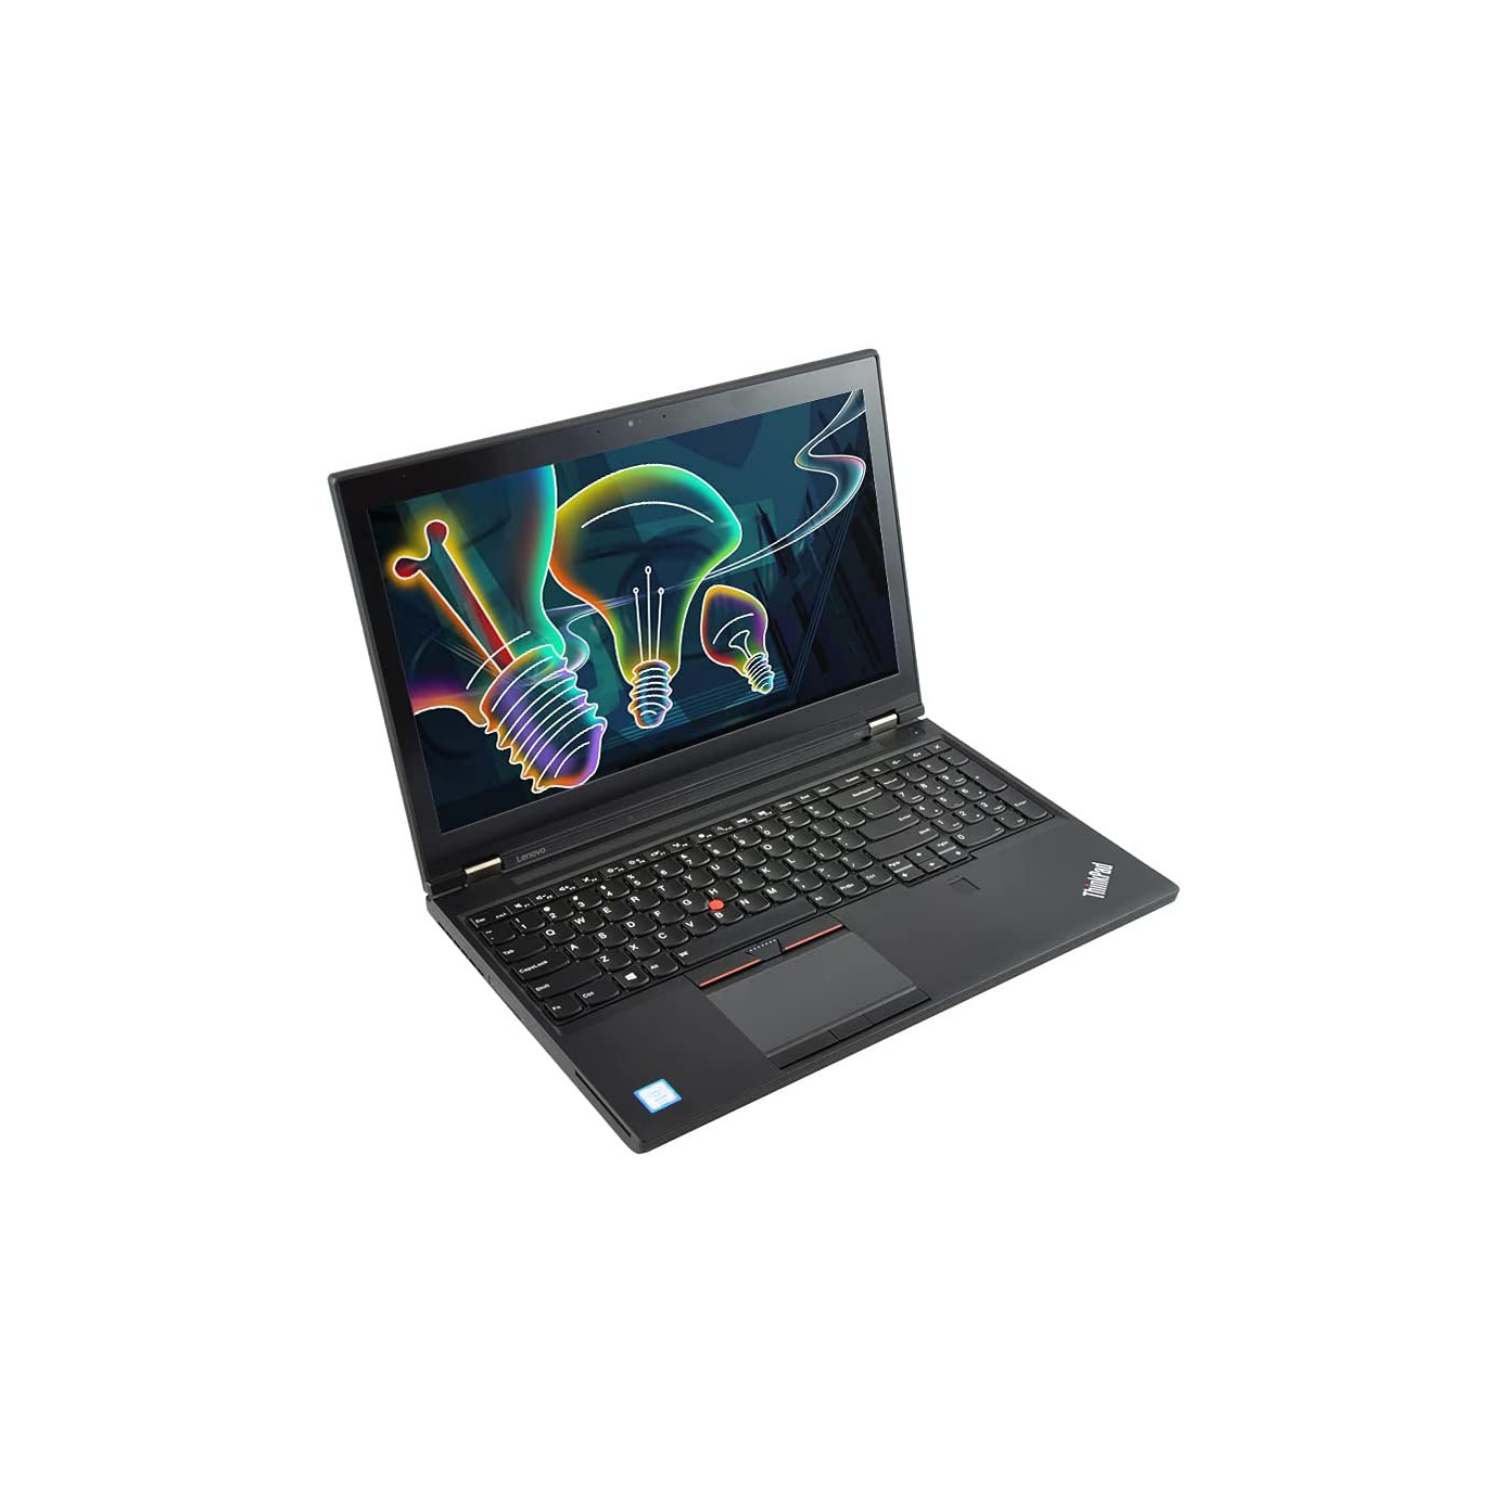 Refurbished (Good) - Lenovo ThinkPad P50 Workstation 15.6" Laptop - Intel Core i7-6700HQ CPU @ 2.60GHz - 16GB RAM - 512GB SSD - Windows 10 Pro(Grade A)